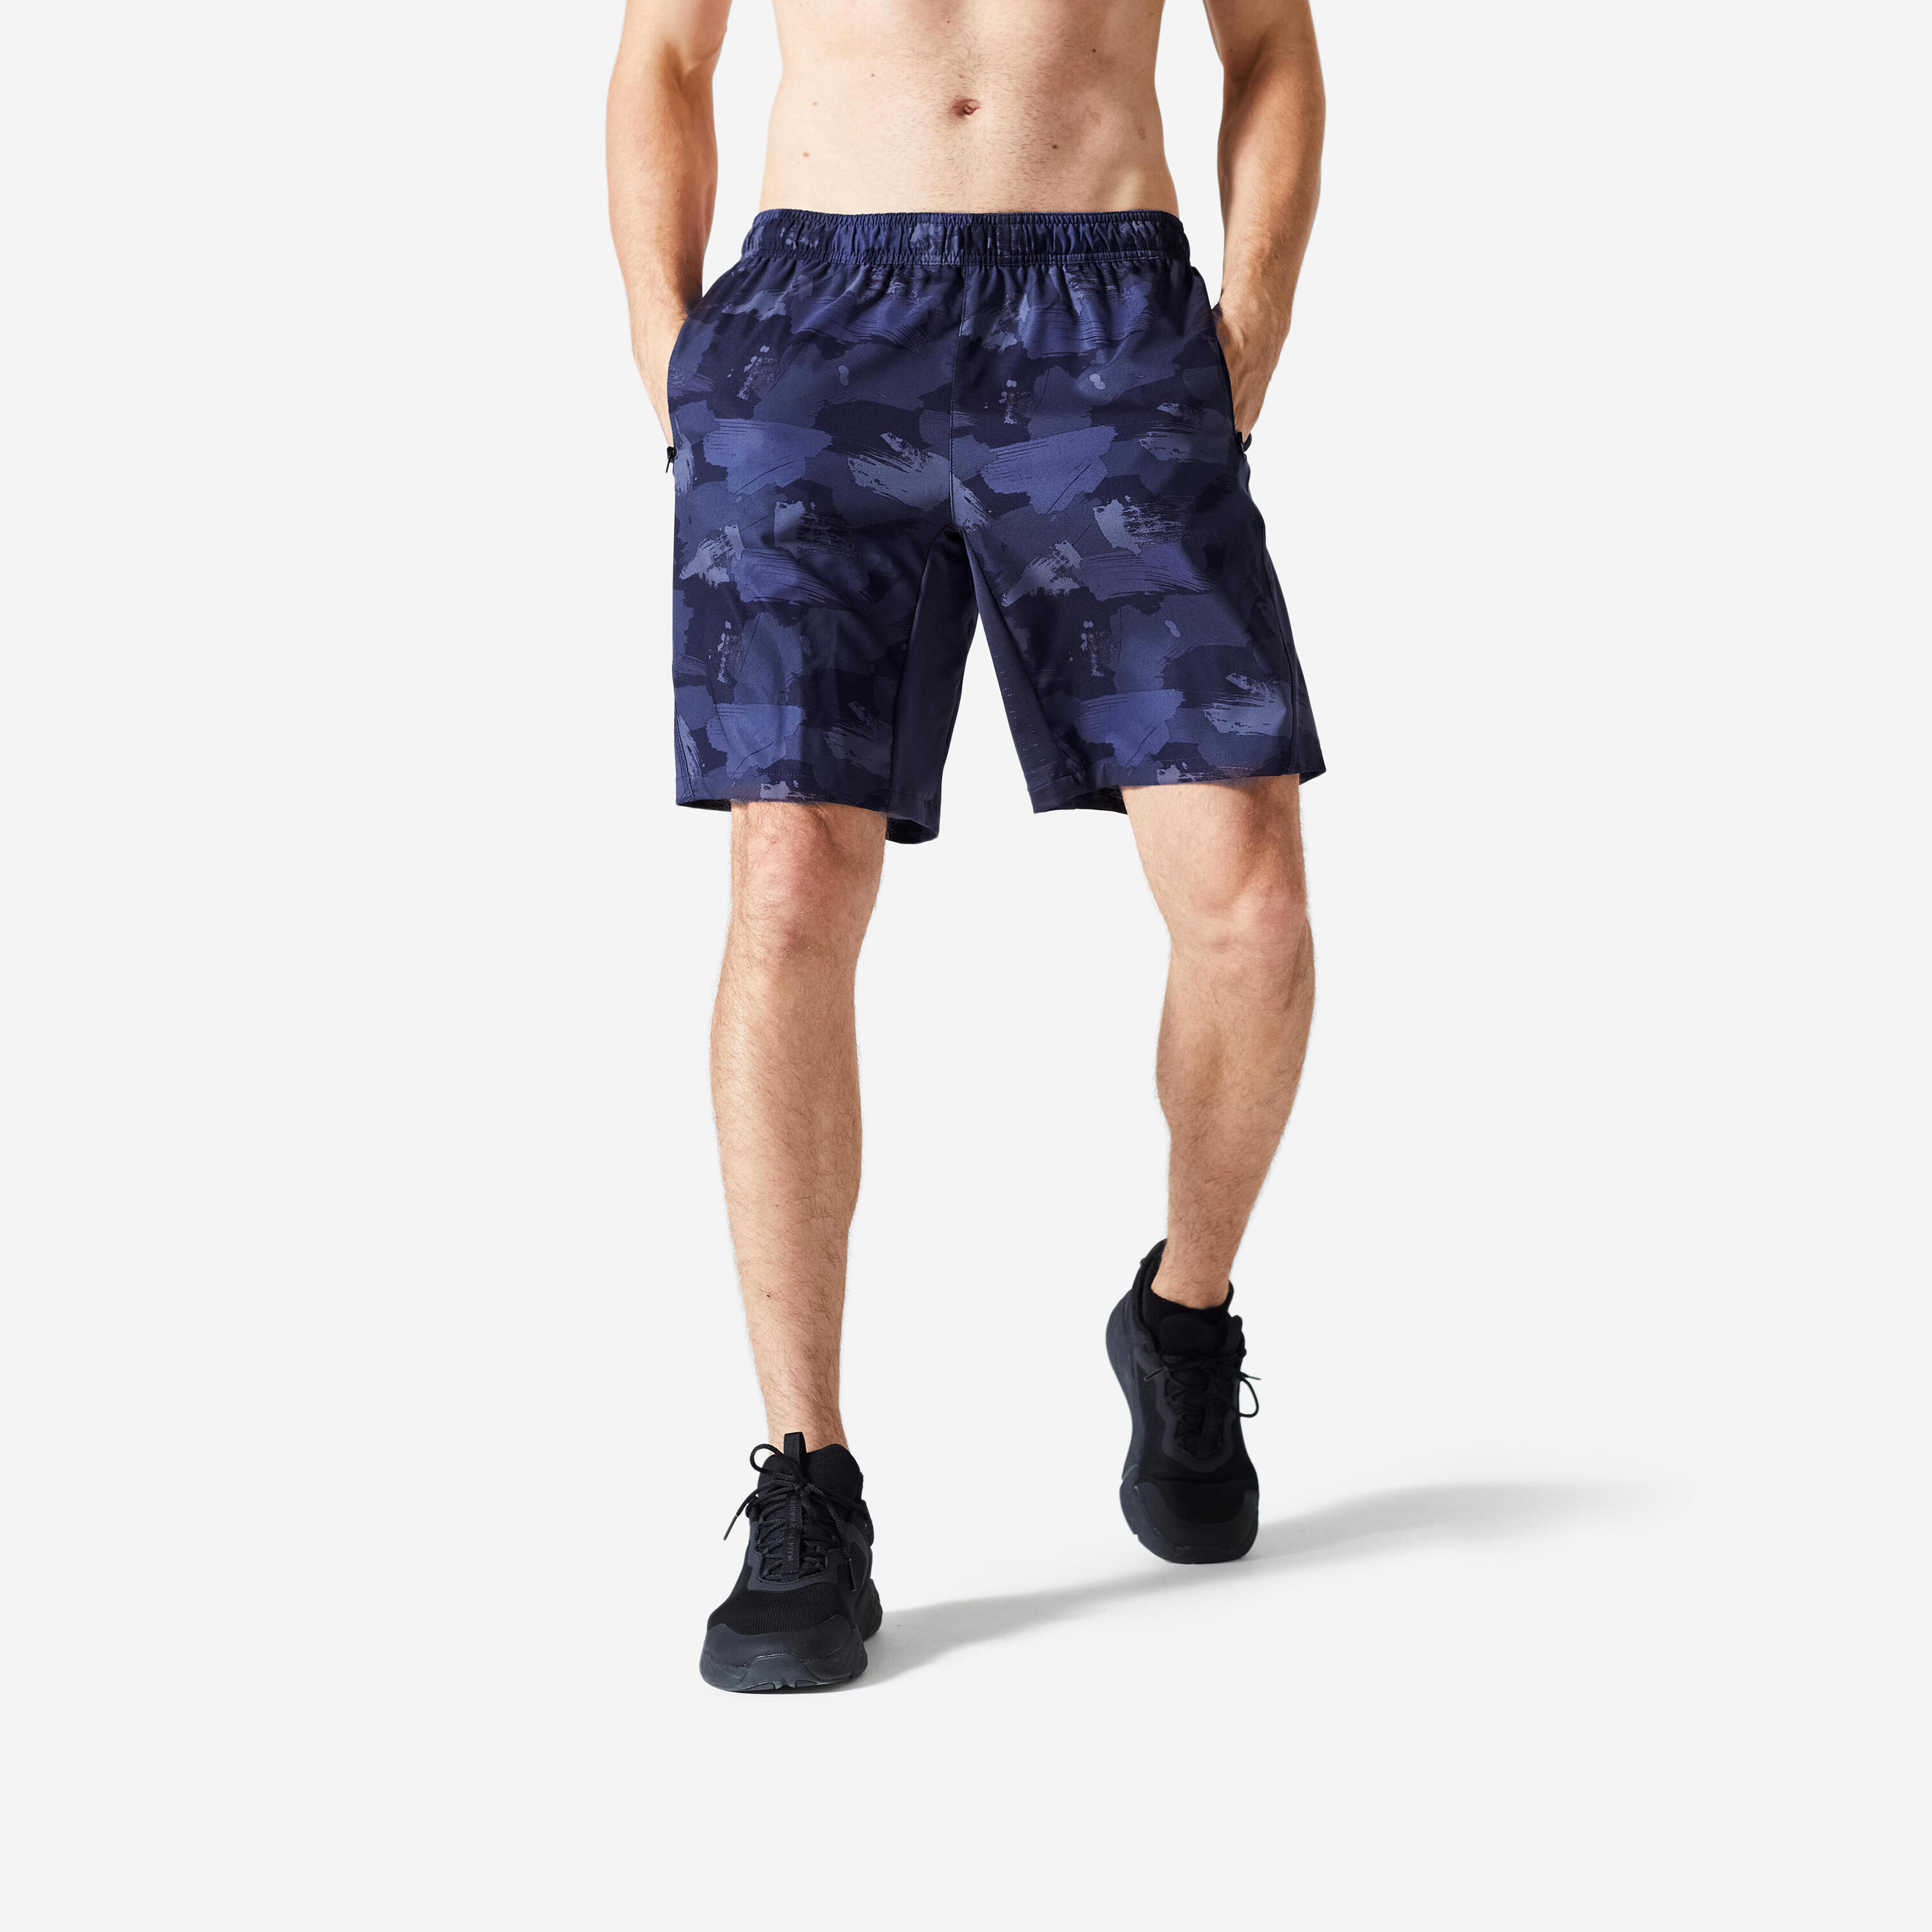 Men's Breathable Fitness Shorts - 500 - Black - Domyos - Decathlon